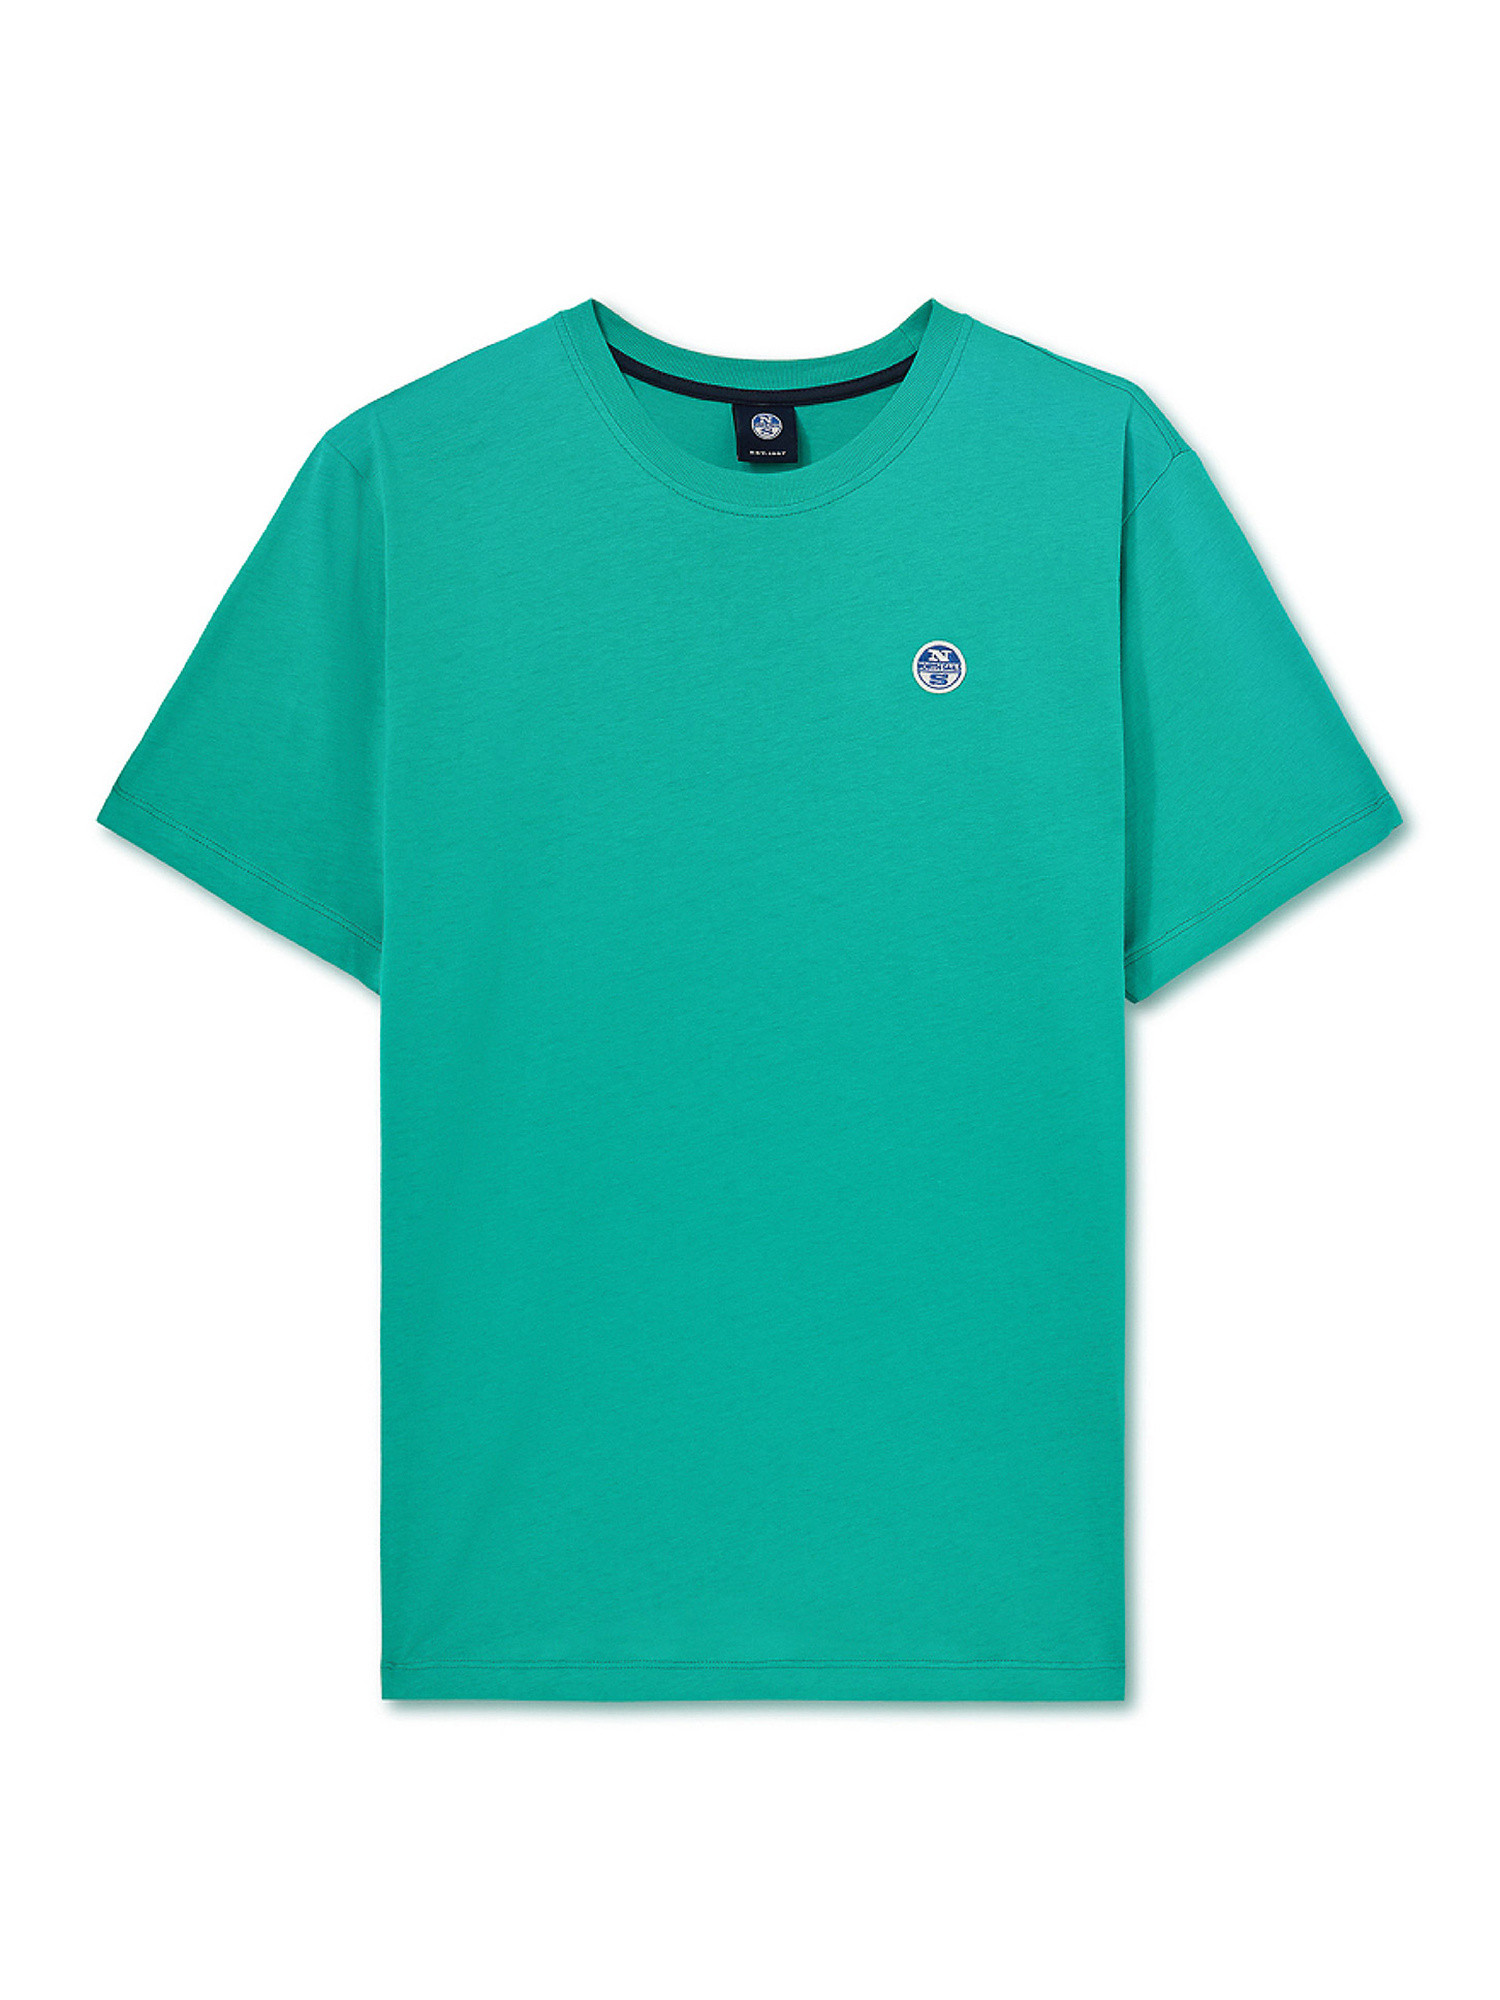 T-shirt manica corta con logo, Verde smeraldo, large